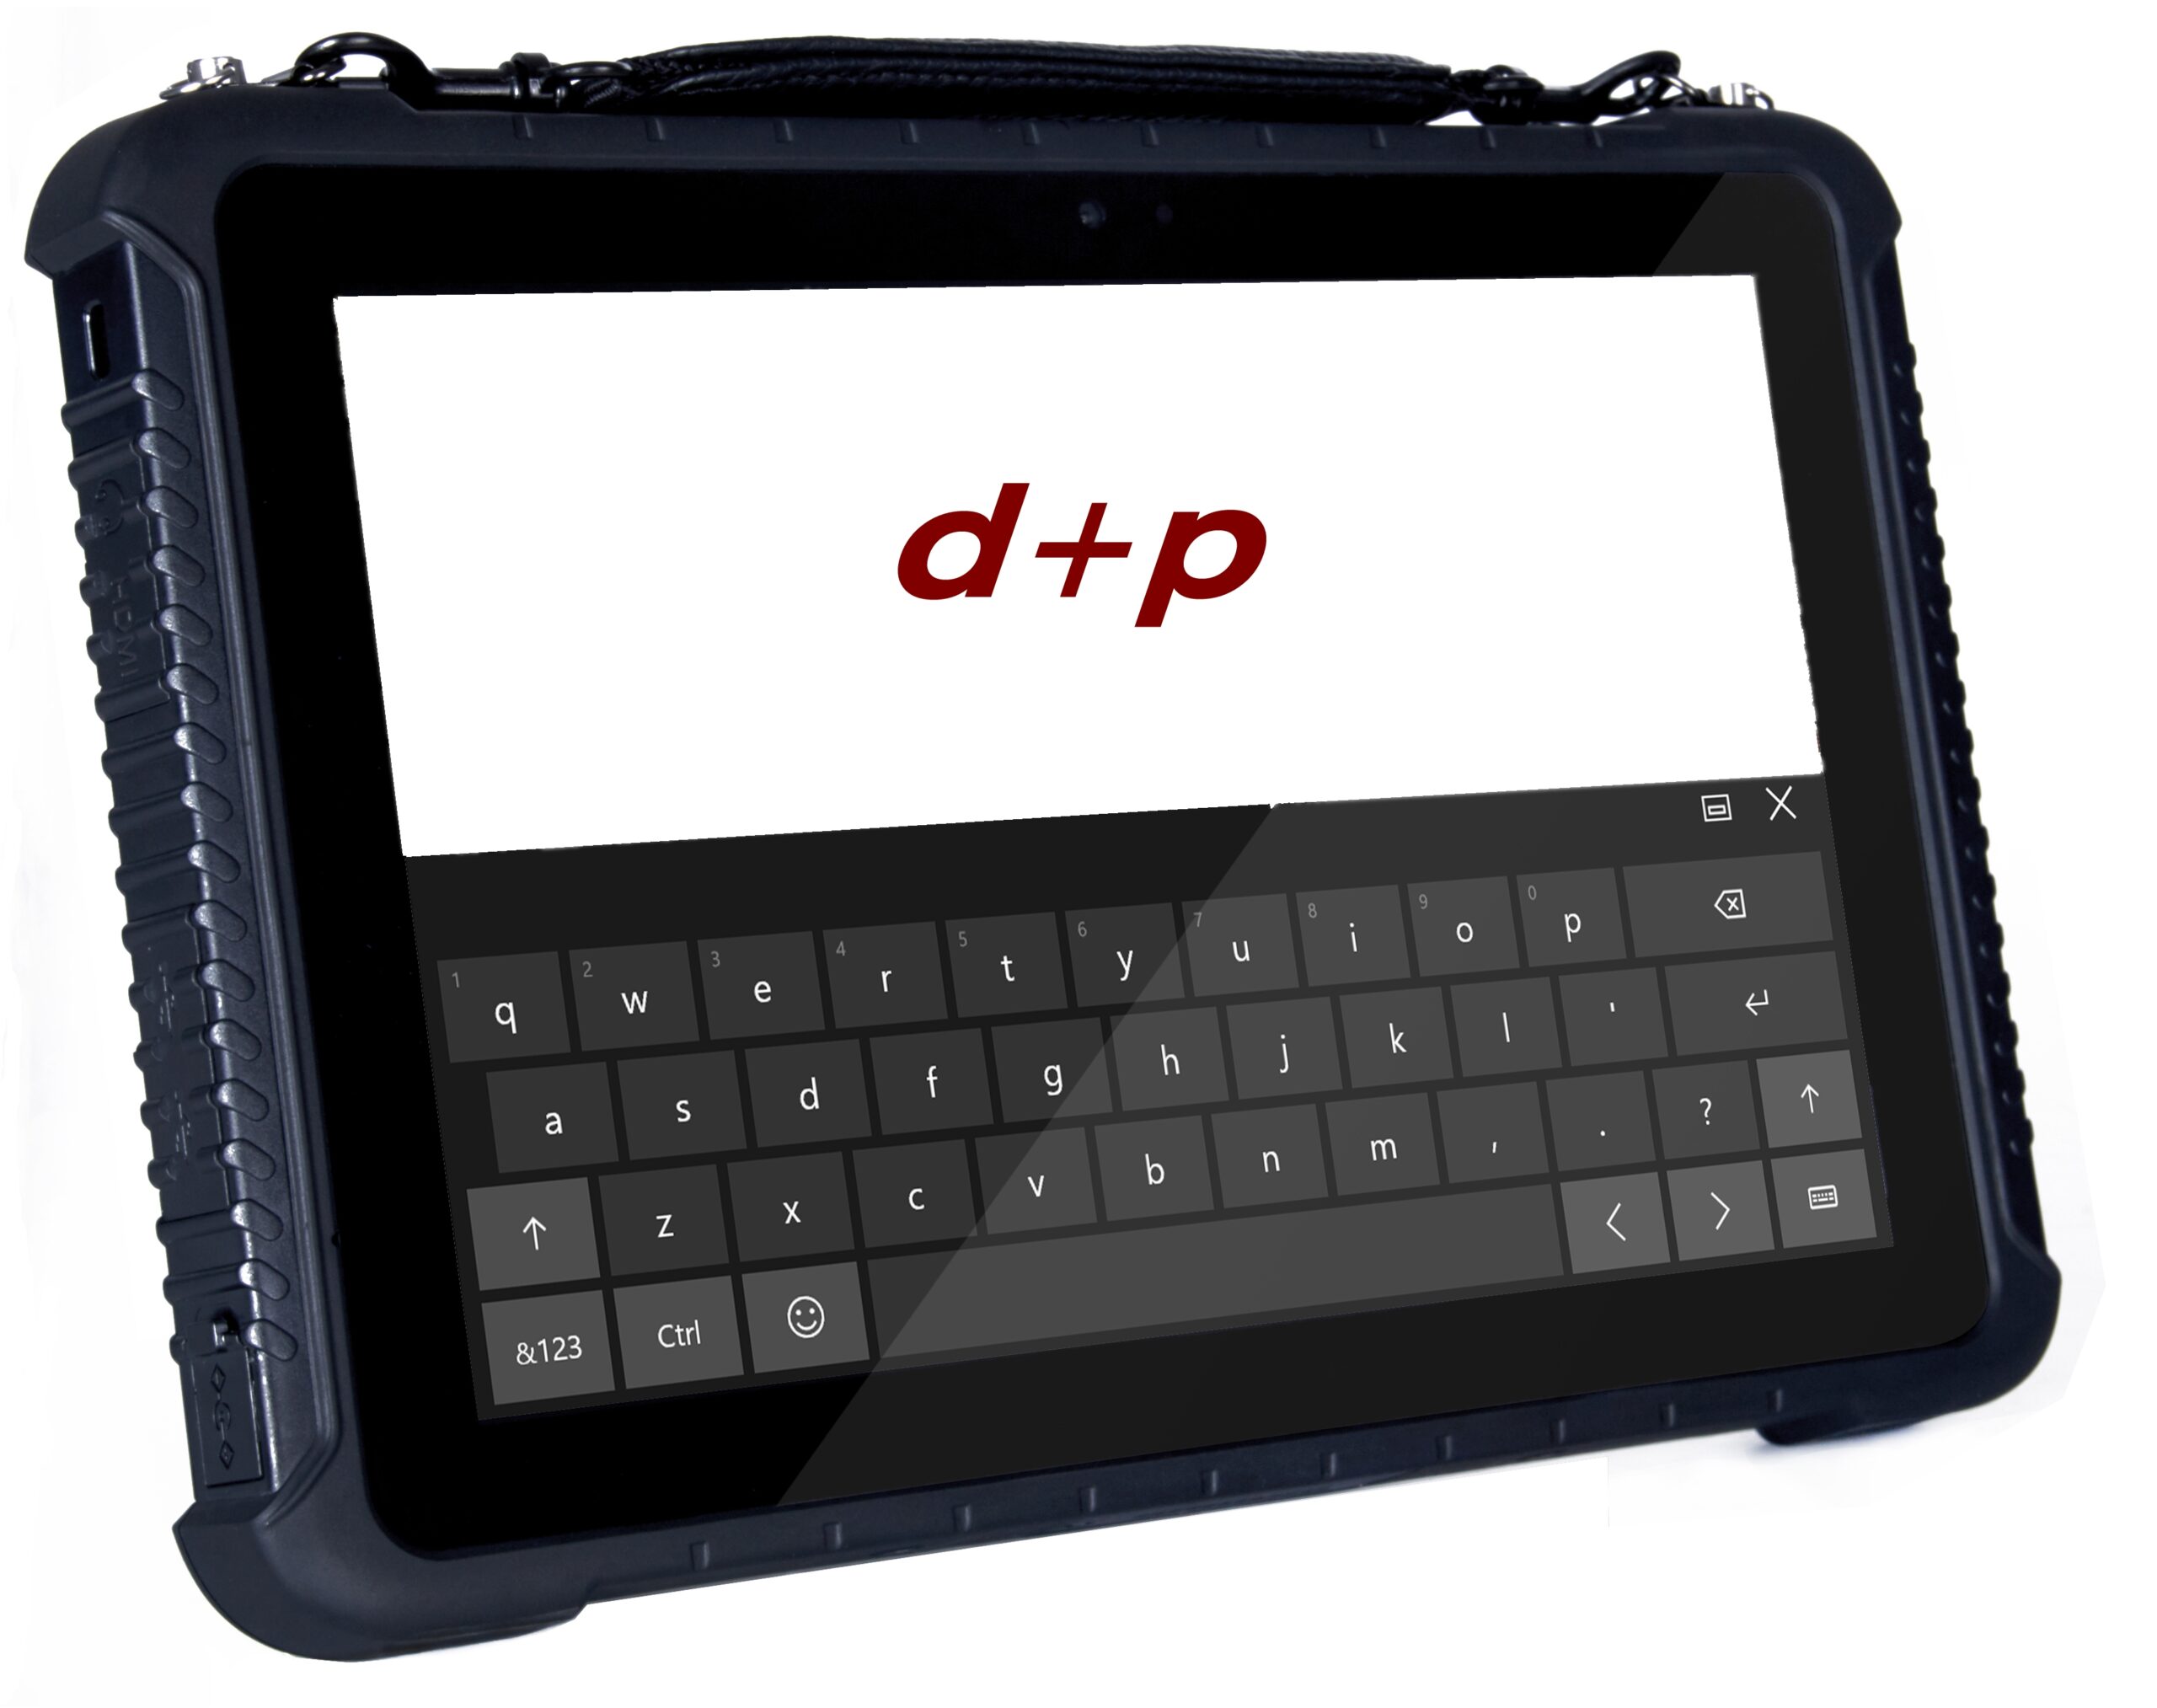 Donner + Pfister (D+P) ES4100 Portable Pitch Tester